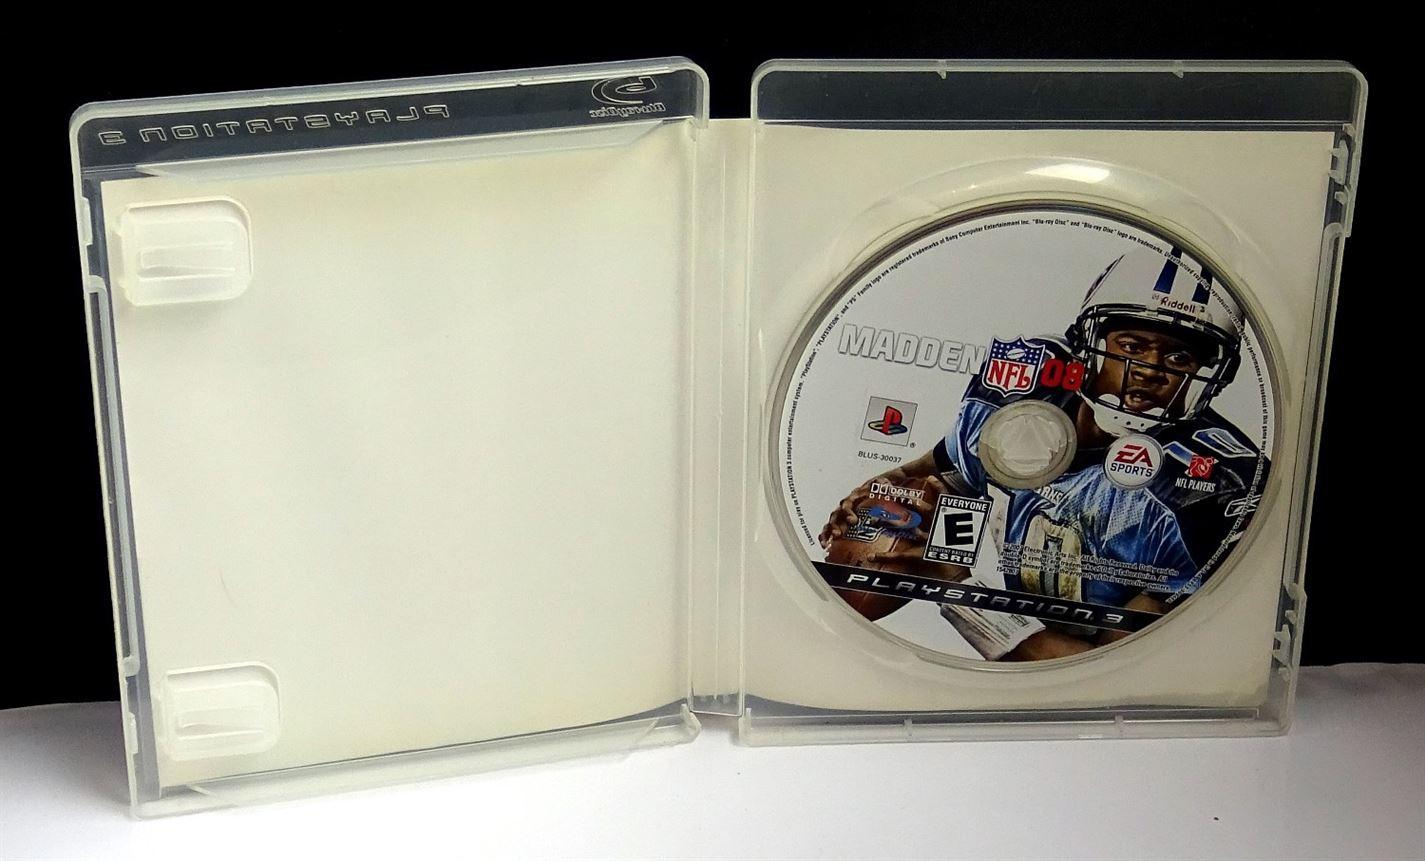 Madden NFL 08 PS3 (Playstation 3) - Free Postage - UK Seller 014633154283 USA Edition